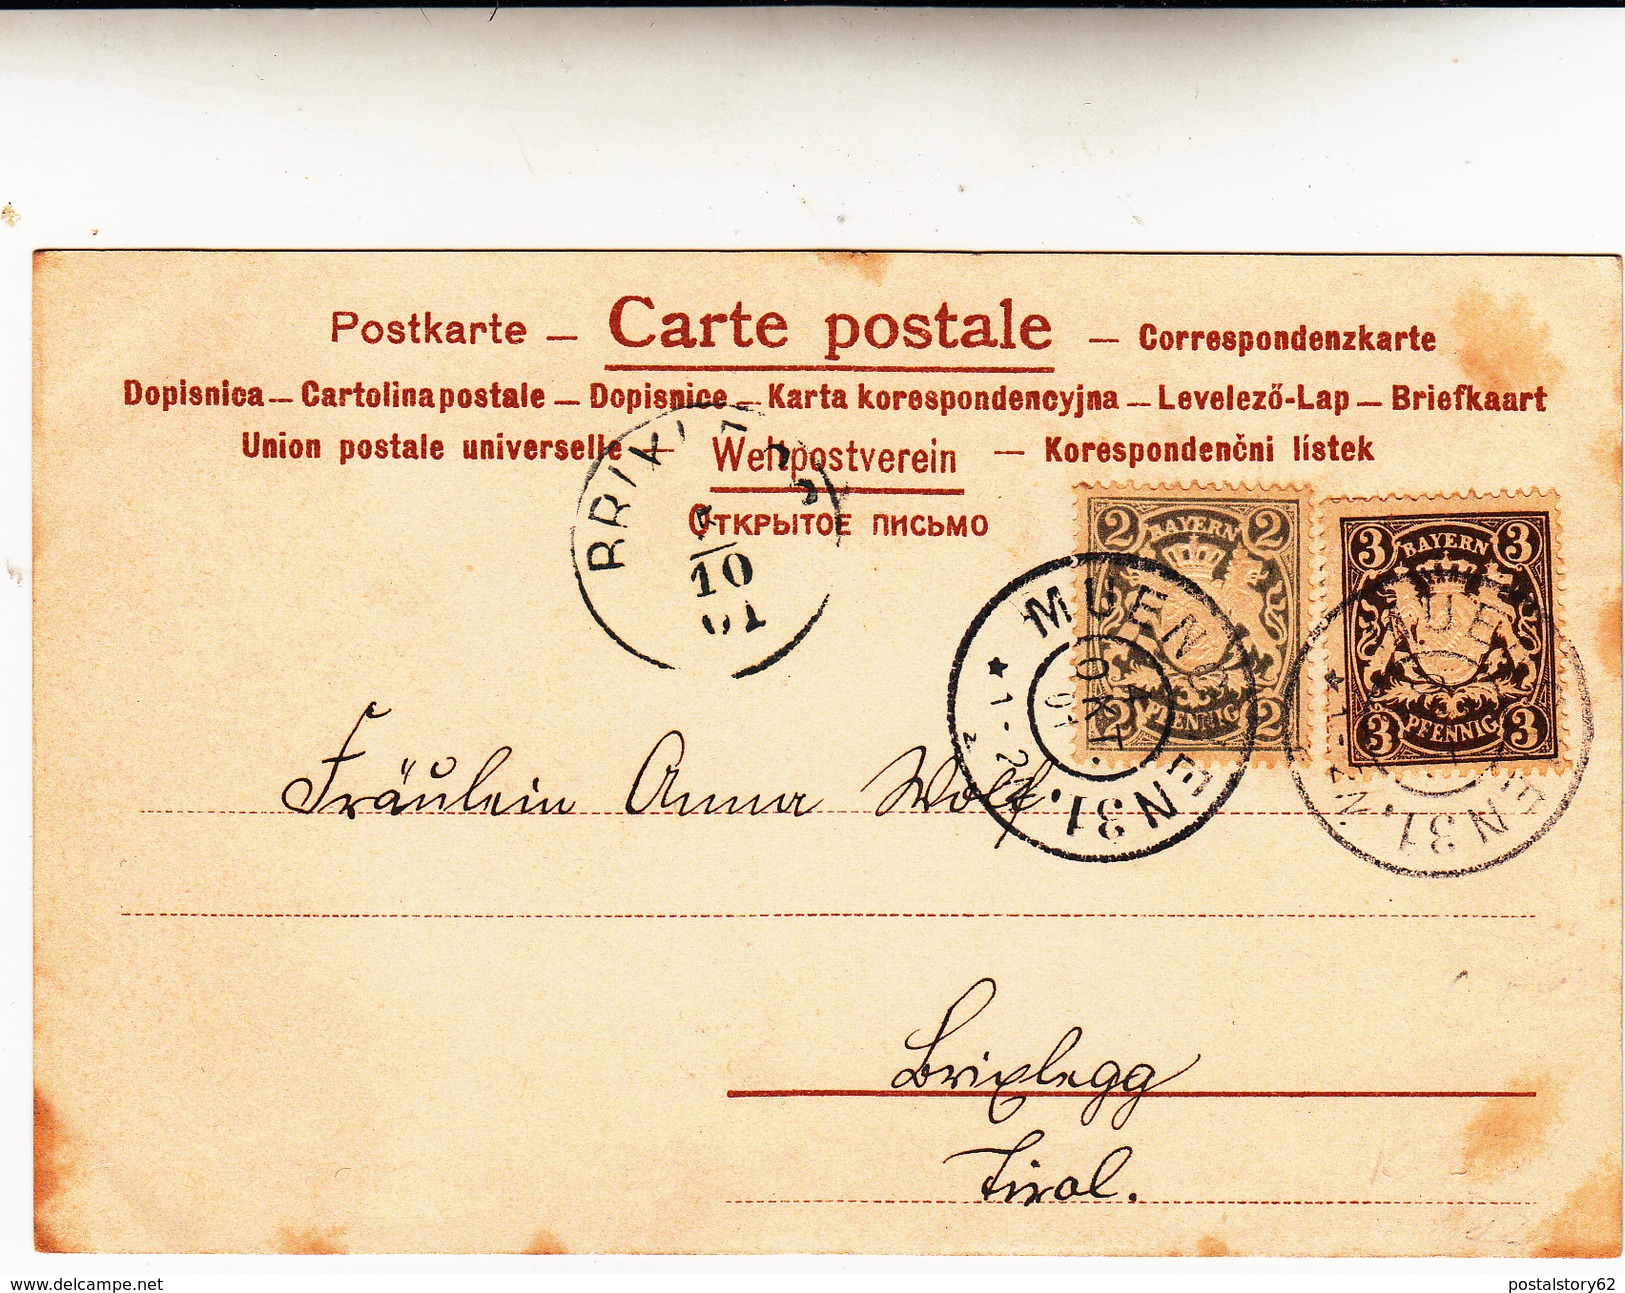 Raphael Kirchner Su Post Card Used 1901 - Kirchner, Raphael